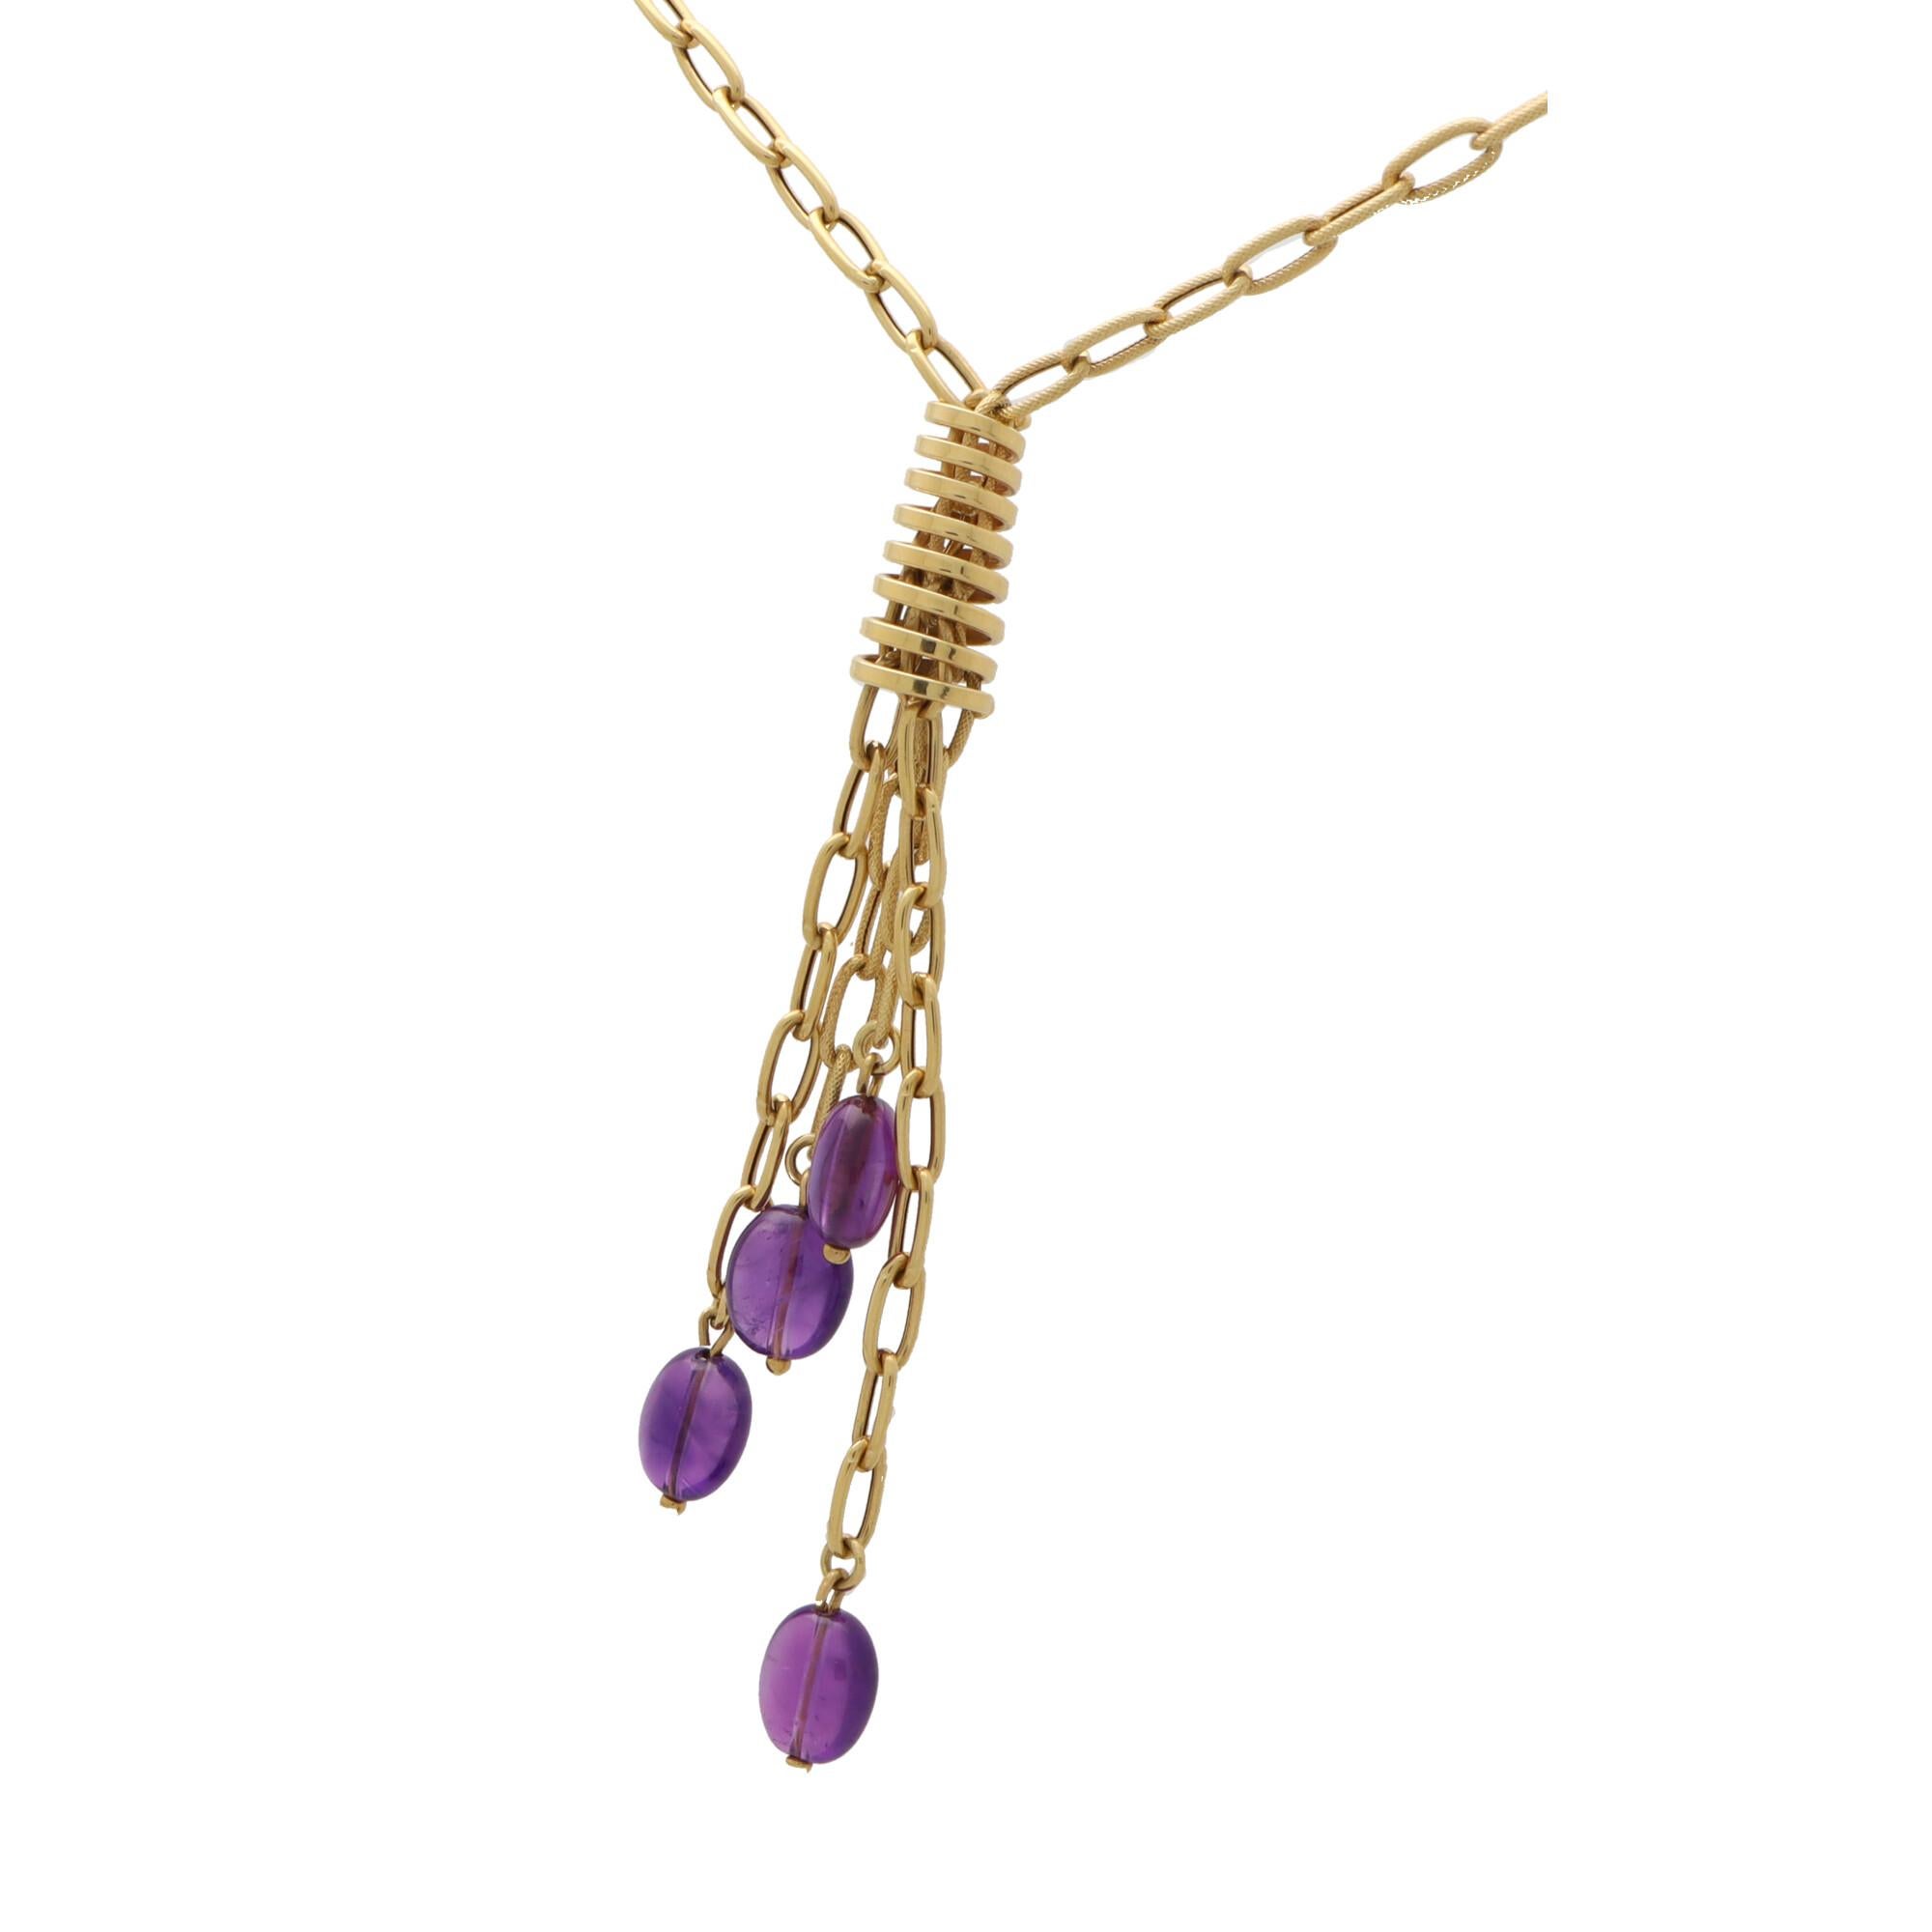 Women's or Men's Vintage Italian Amethyst Chain Link Tassel Necklace Set in 18k Yellow Gold